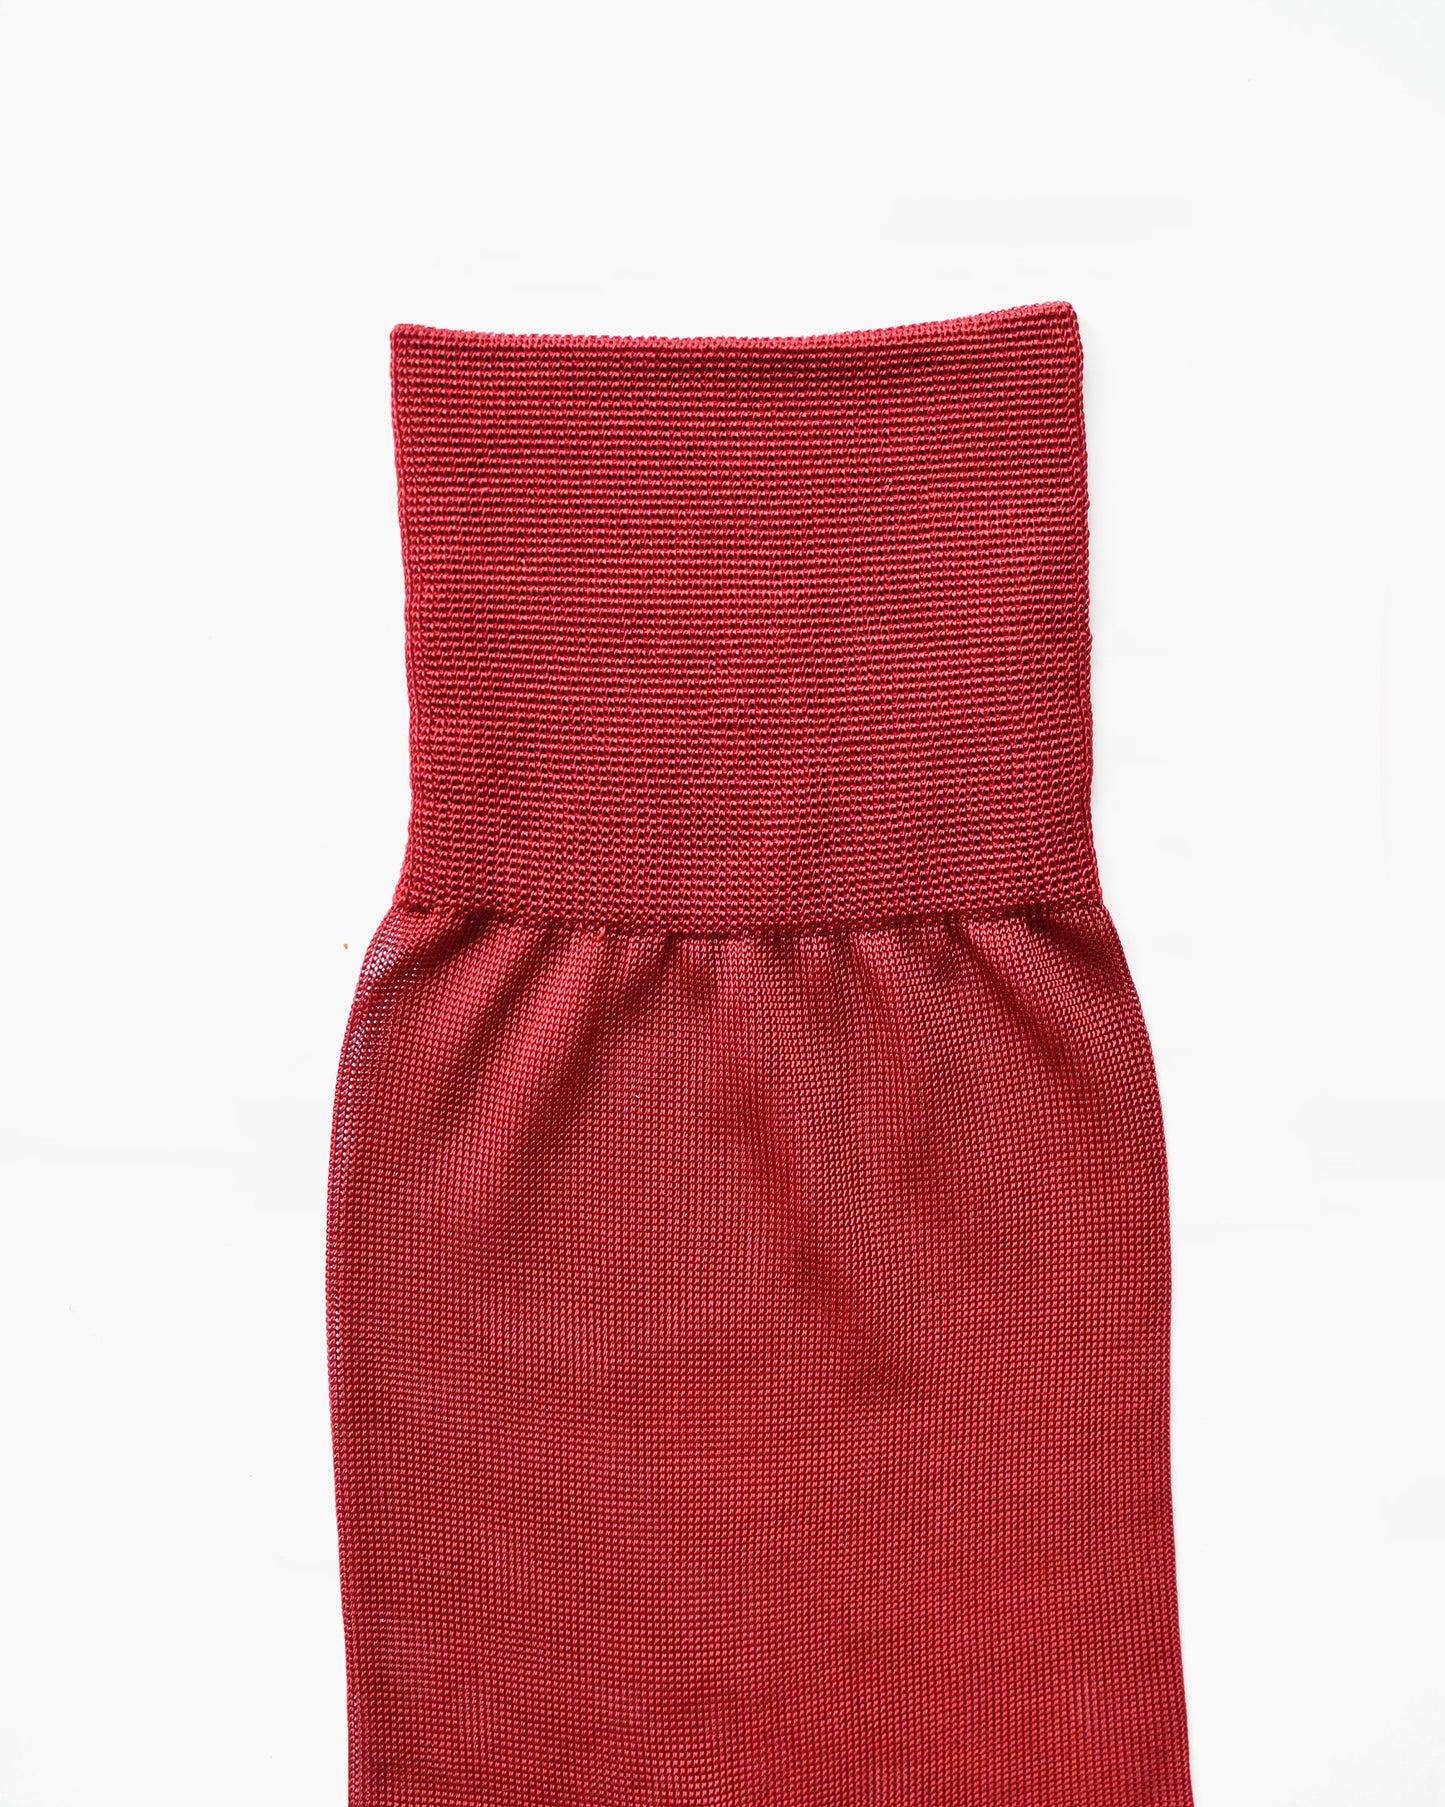 Dress Socks - Red